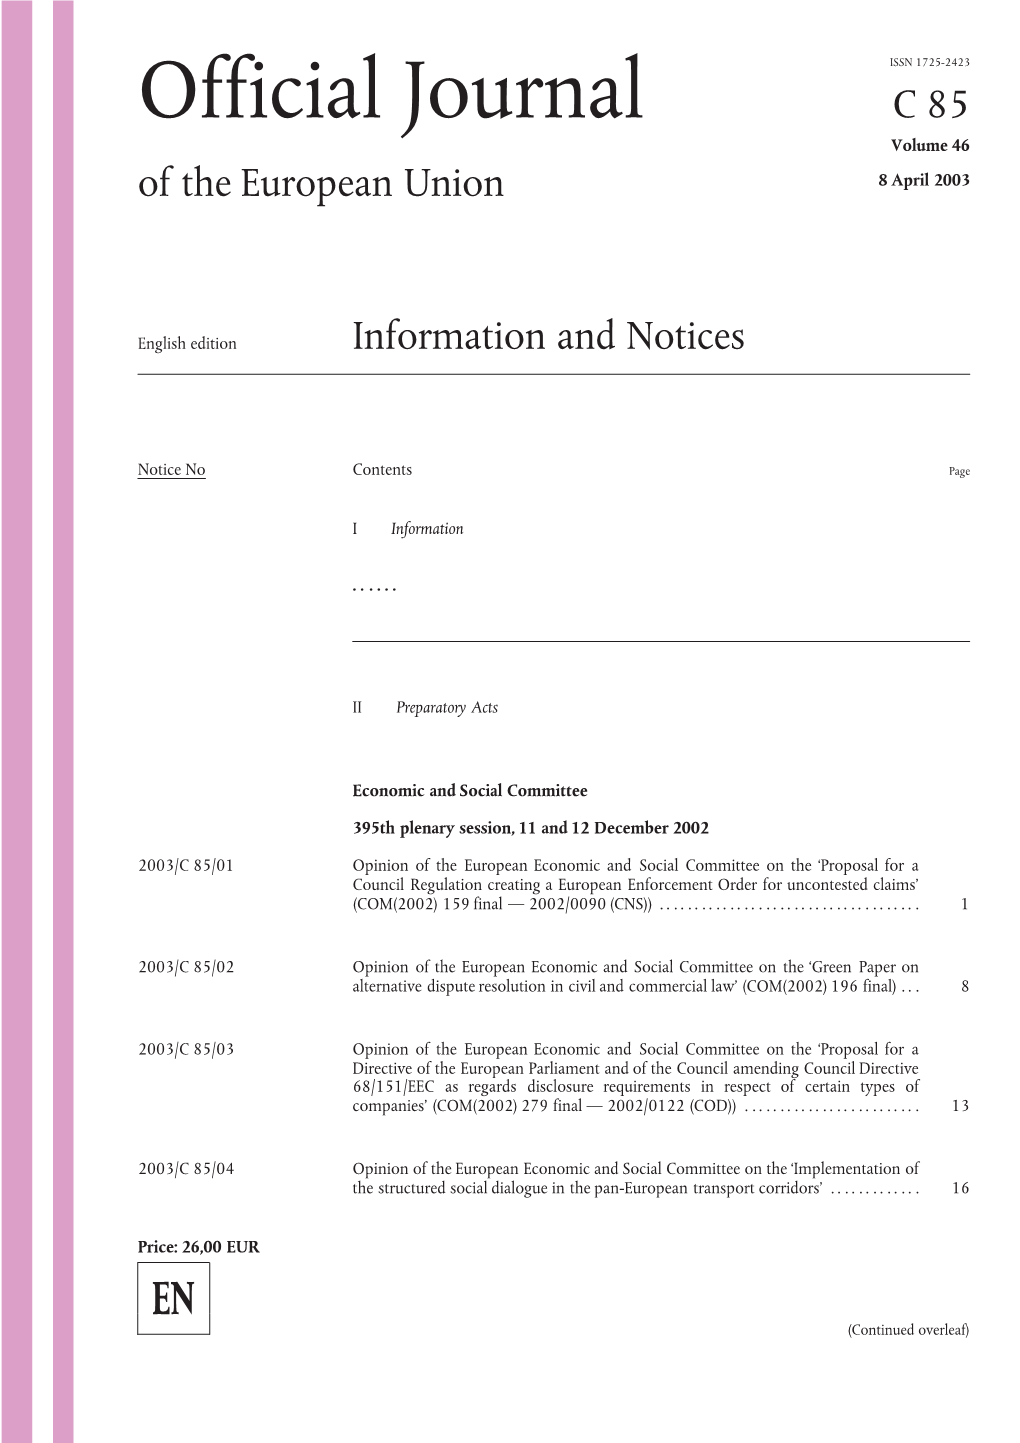 Official Journal C85 Volume 46 of the European Union 8 April 2003